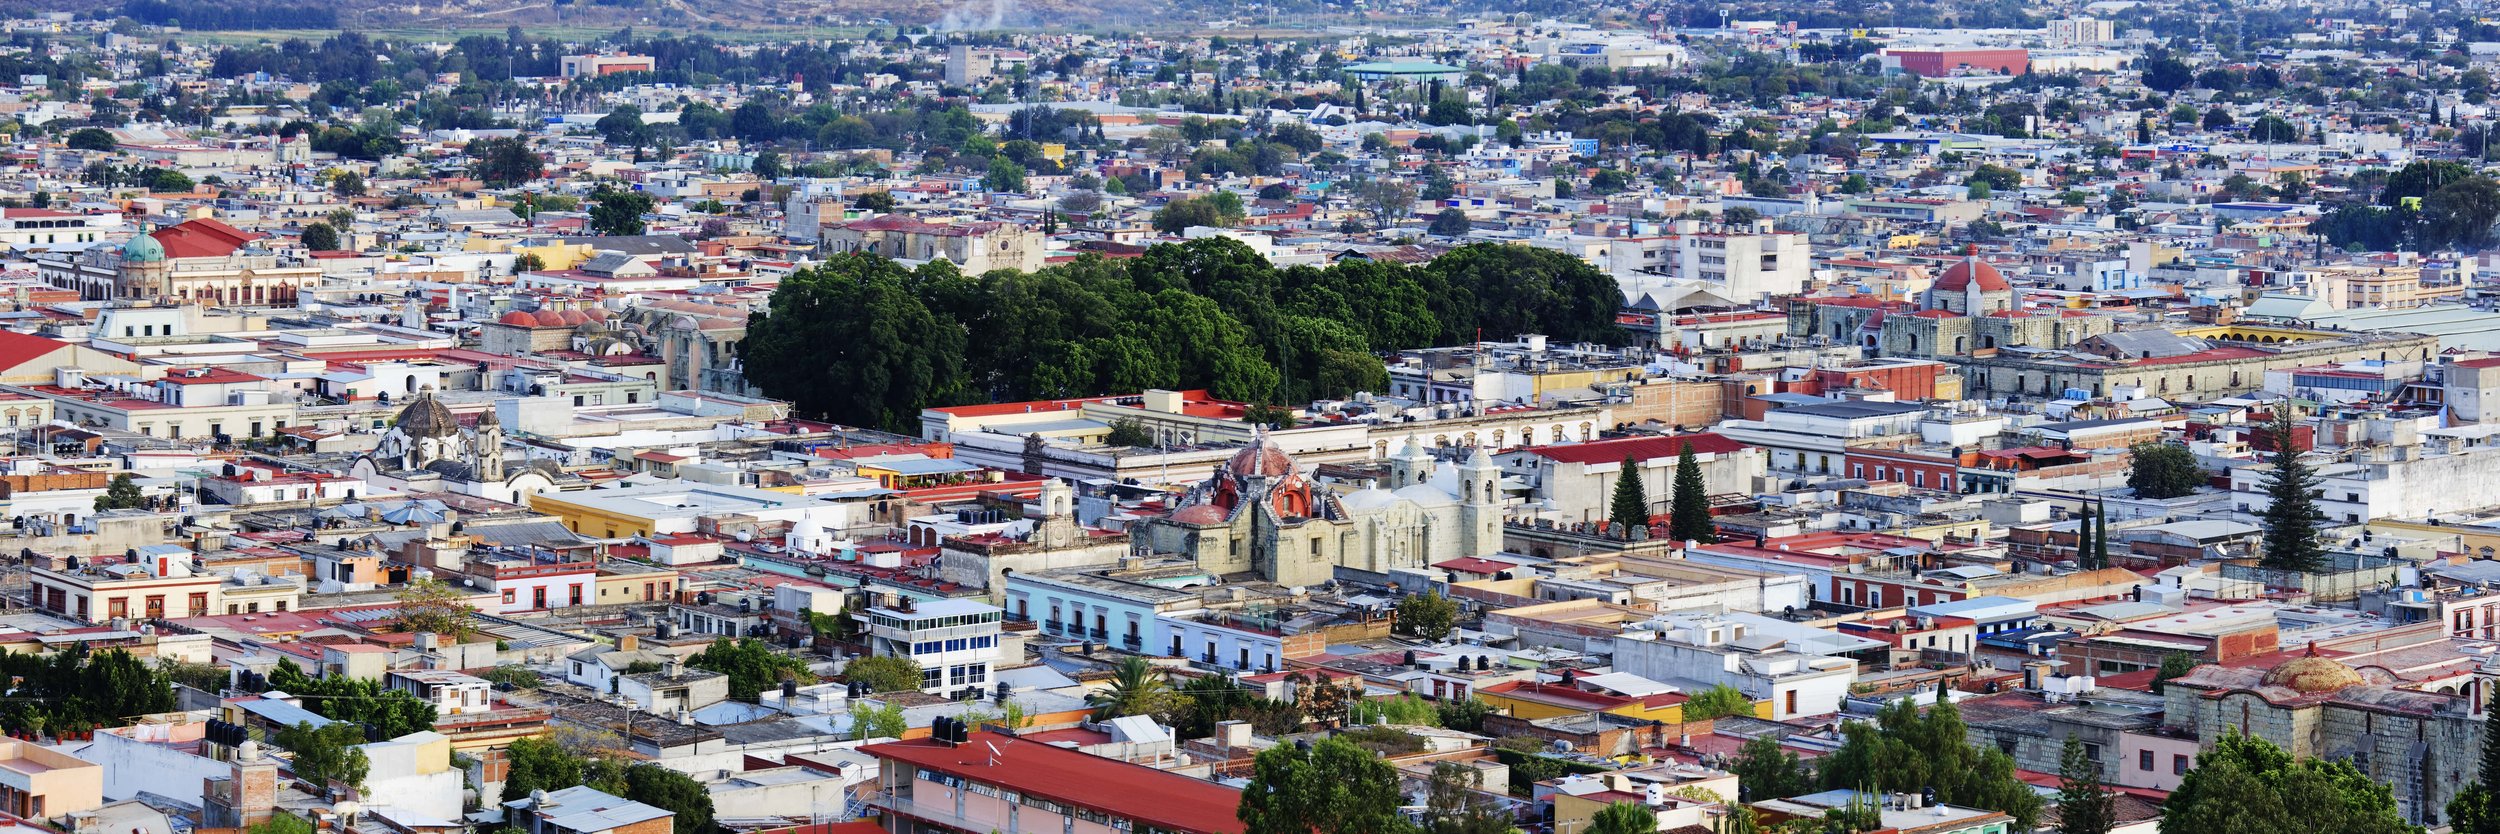 panoramic-cityscape-of-oaxaca-2022-03-04-02-21-31-utc-min.jpg